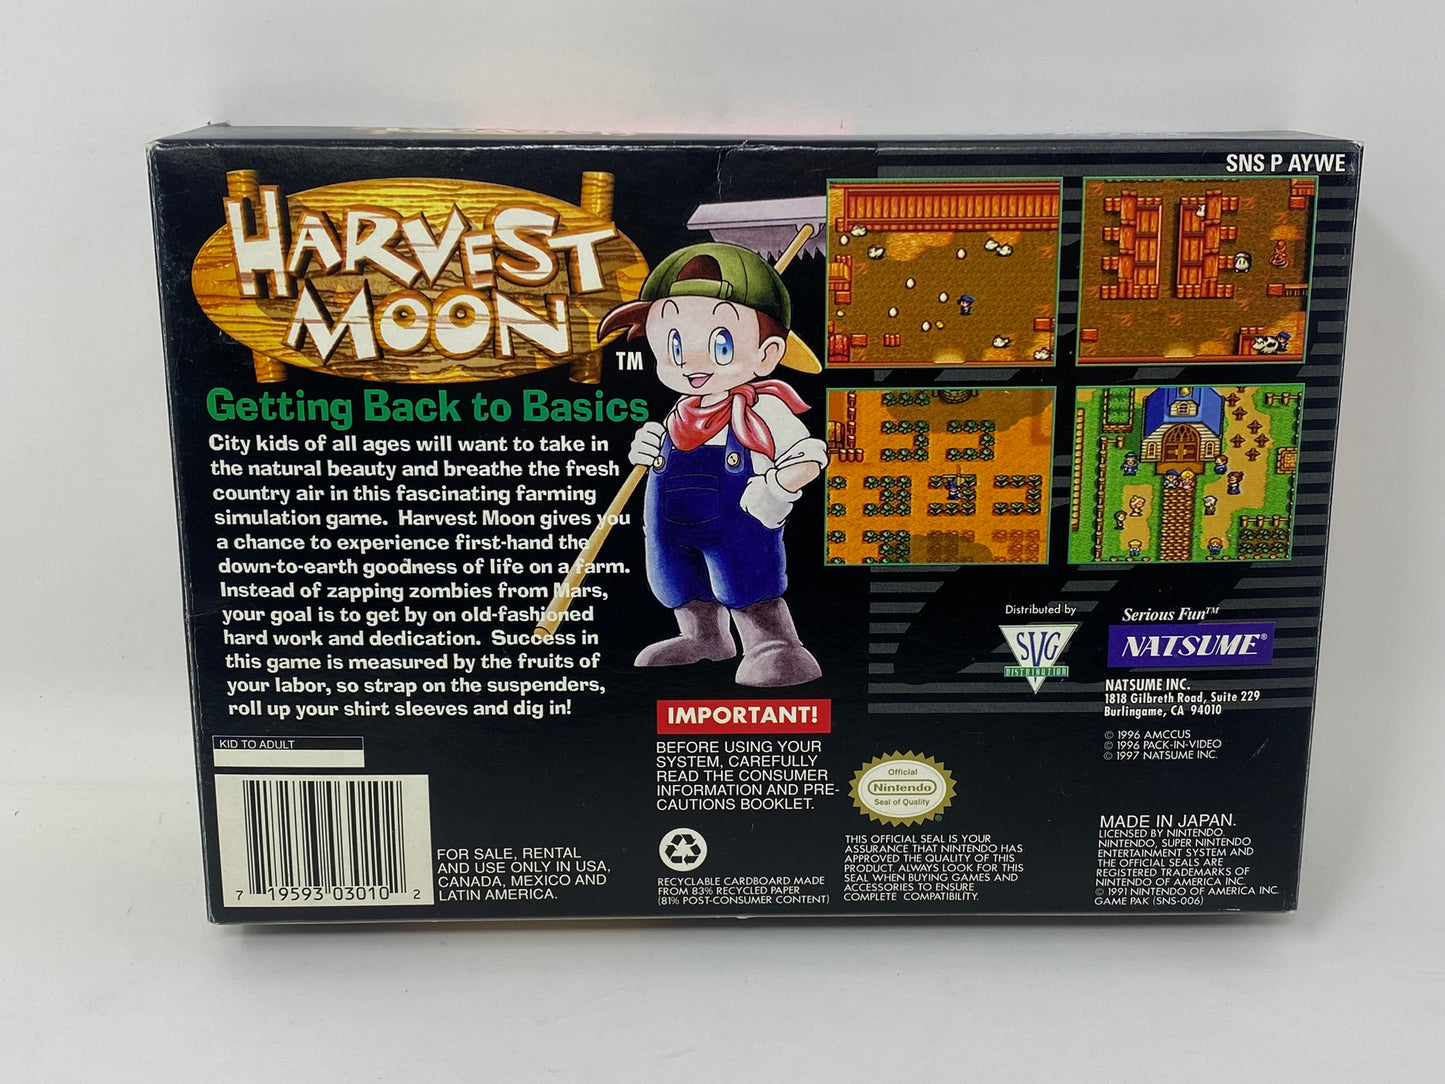 SNES Super Nintendo - Harvest Moon - CIB Complete